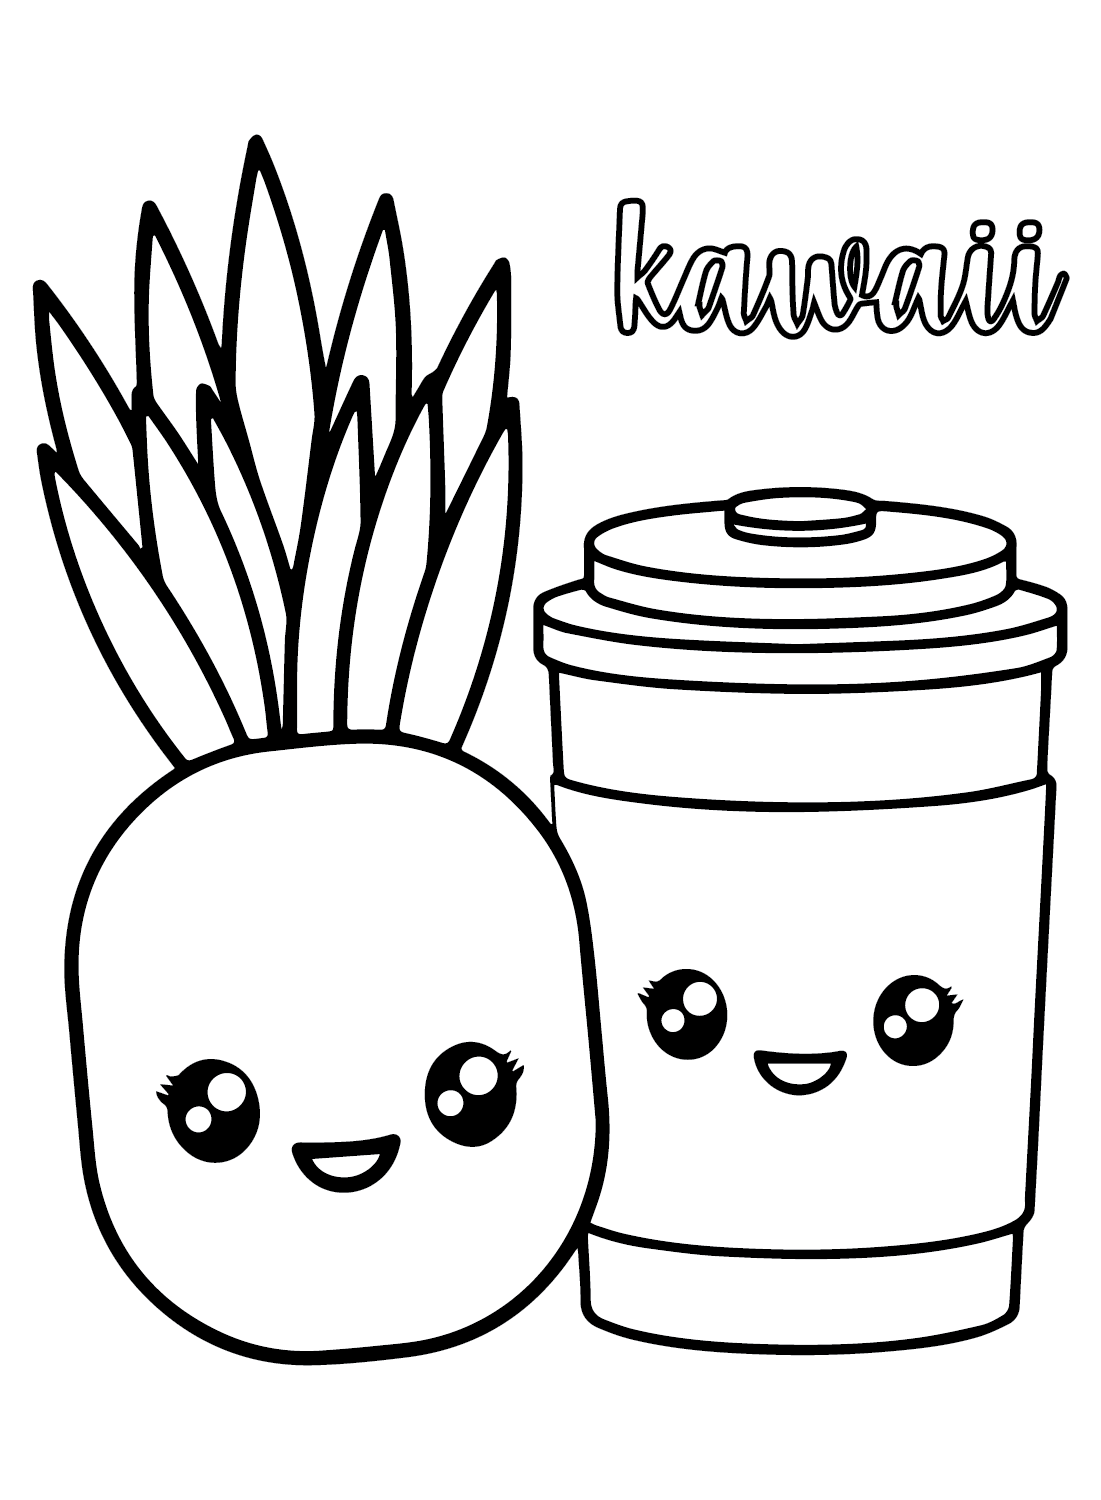 Kawaii Ananas von Pineapples